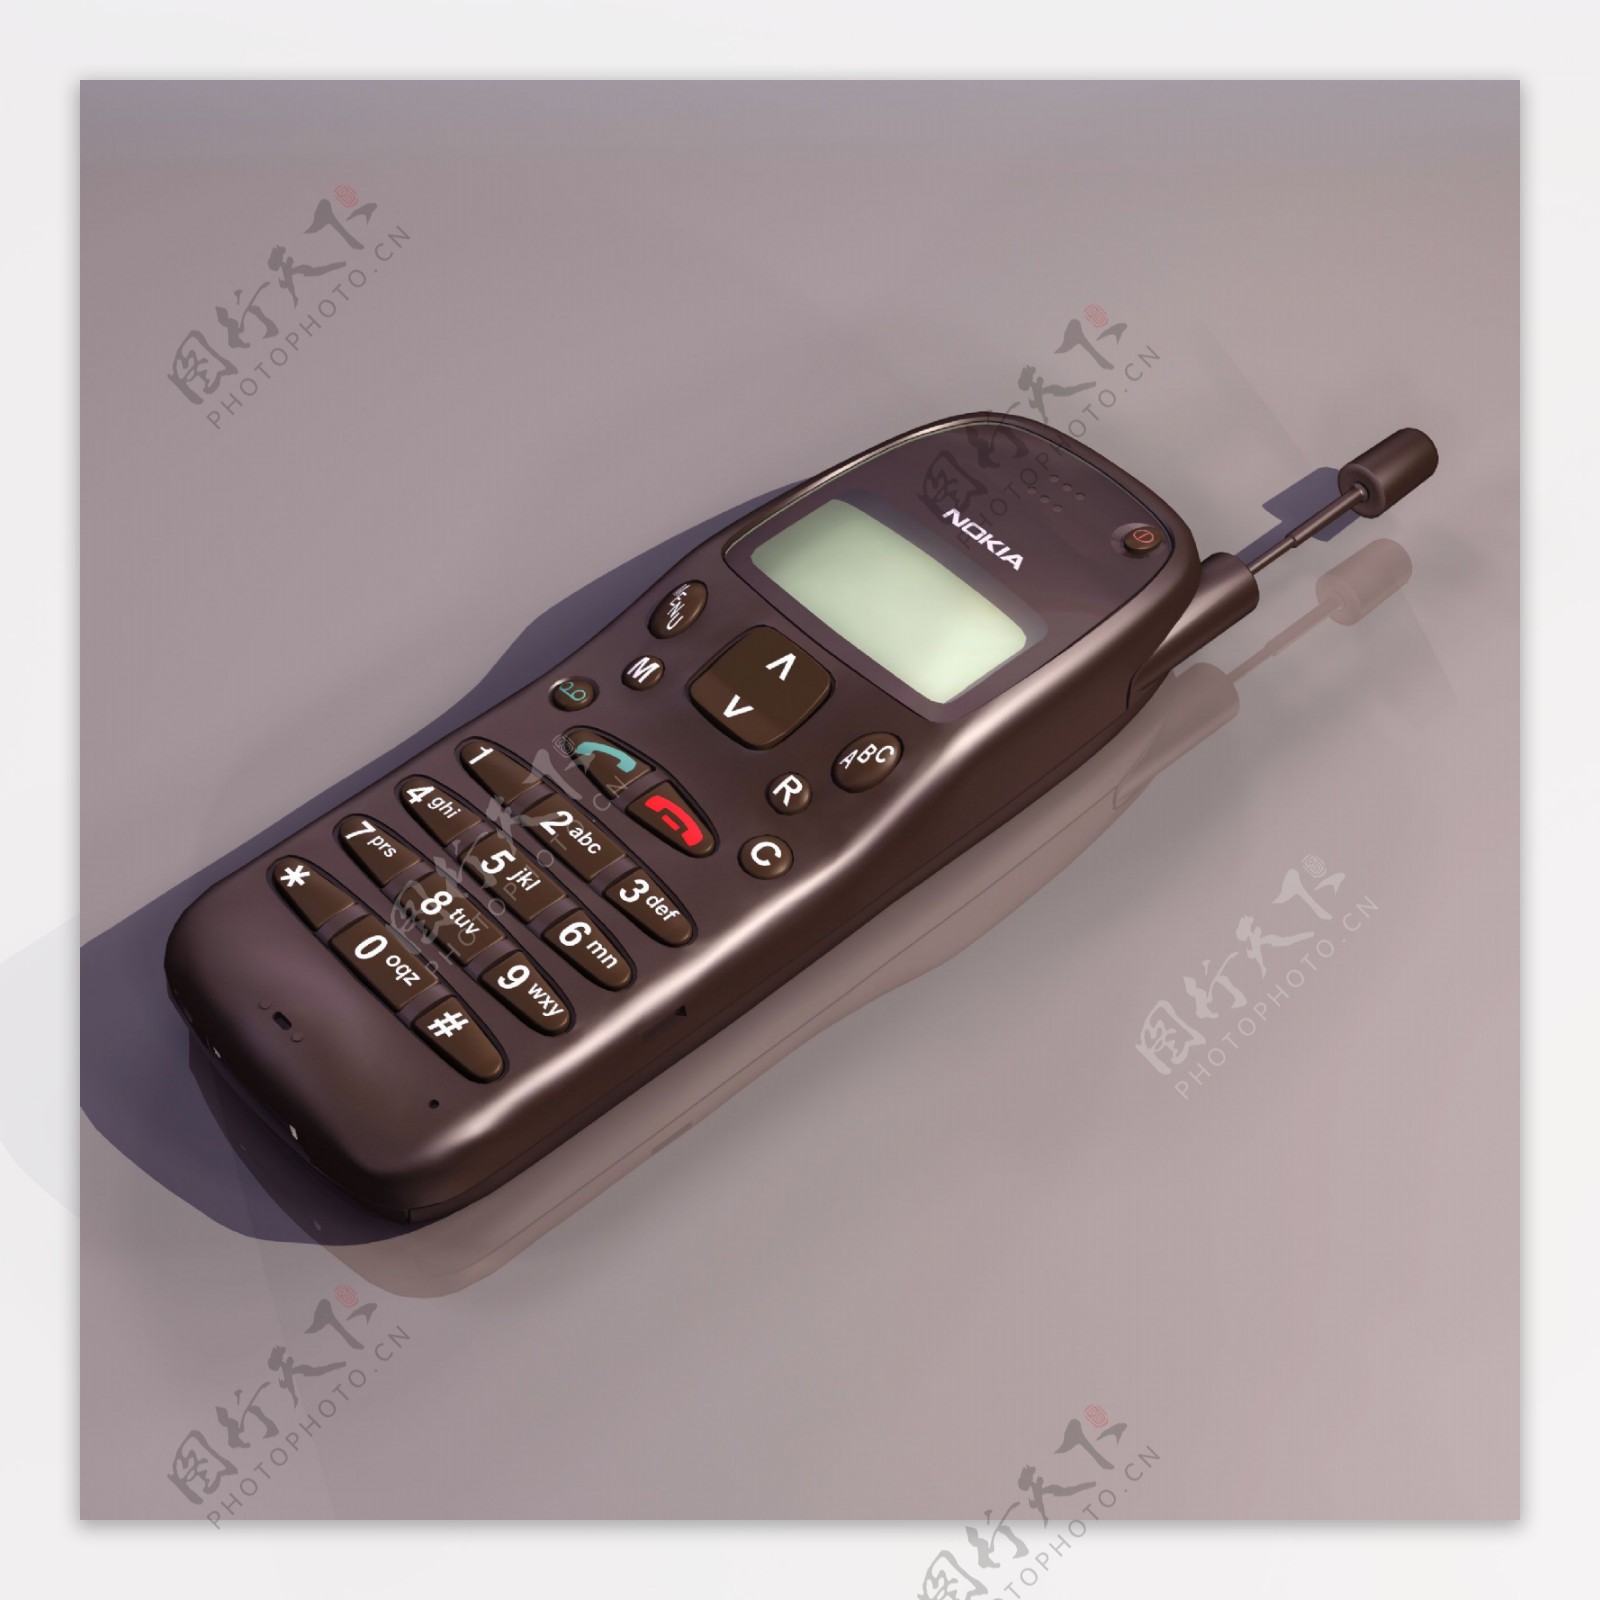 NOKIA诺基亚老式手机模型01